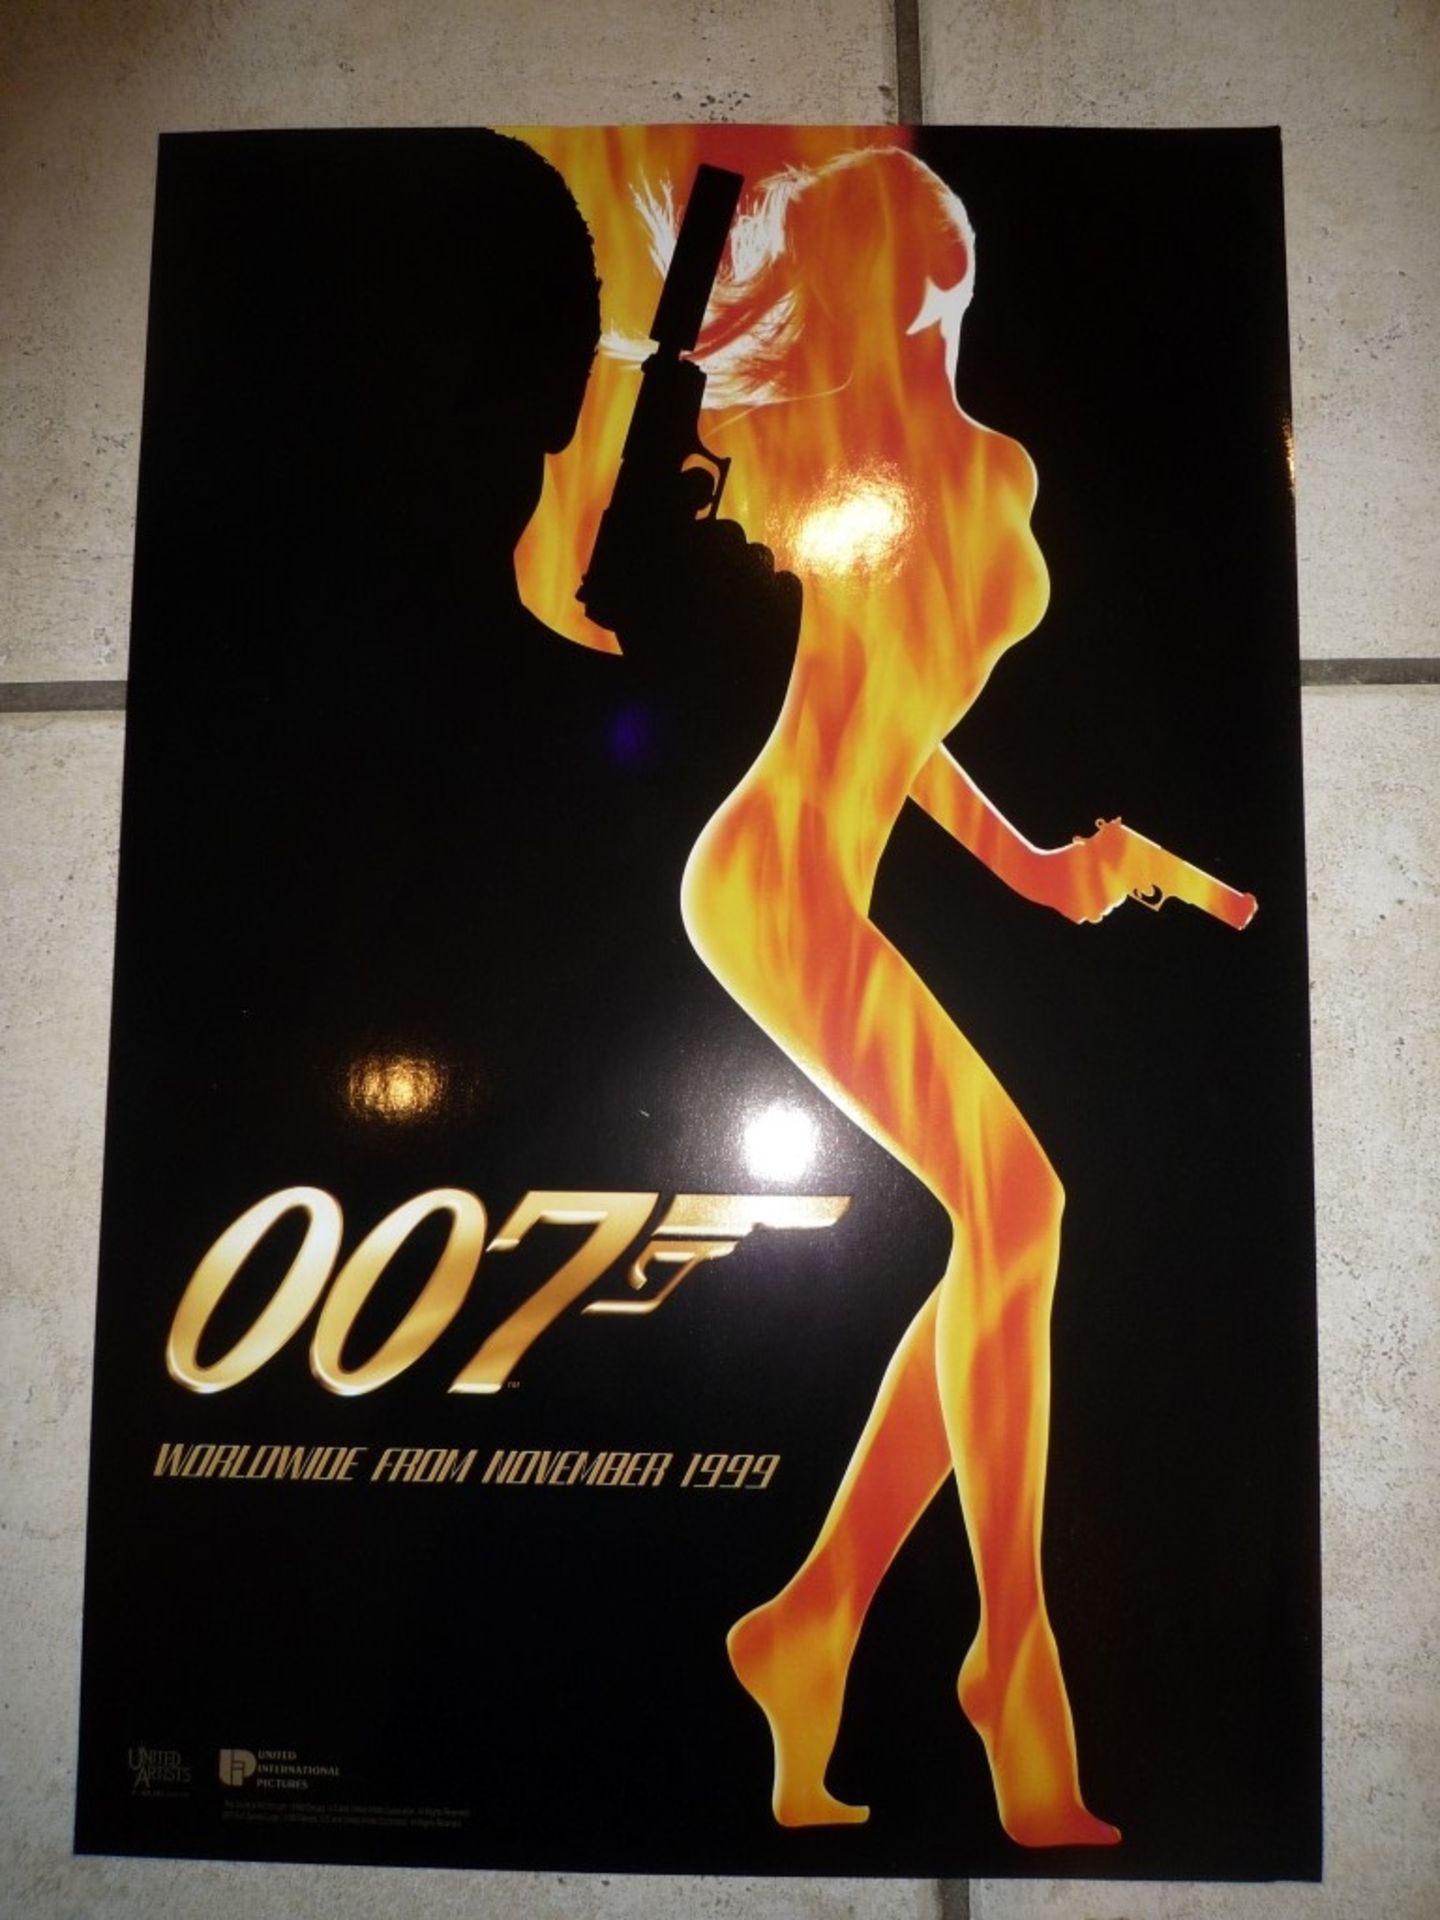 James Bond Flame Girl Image window card